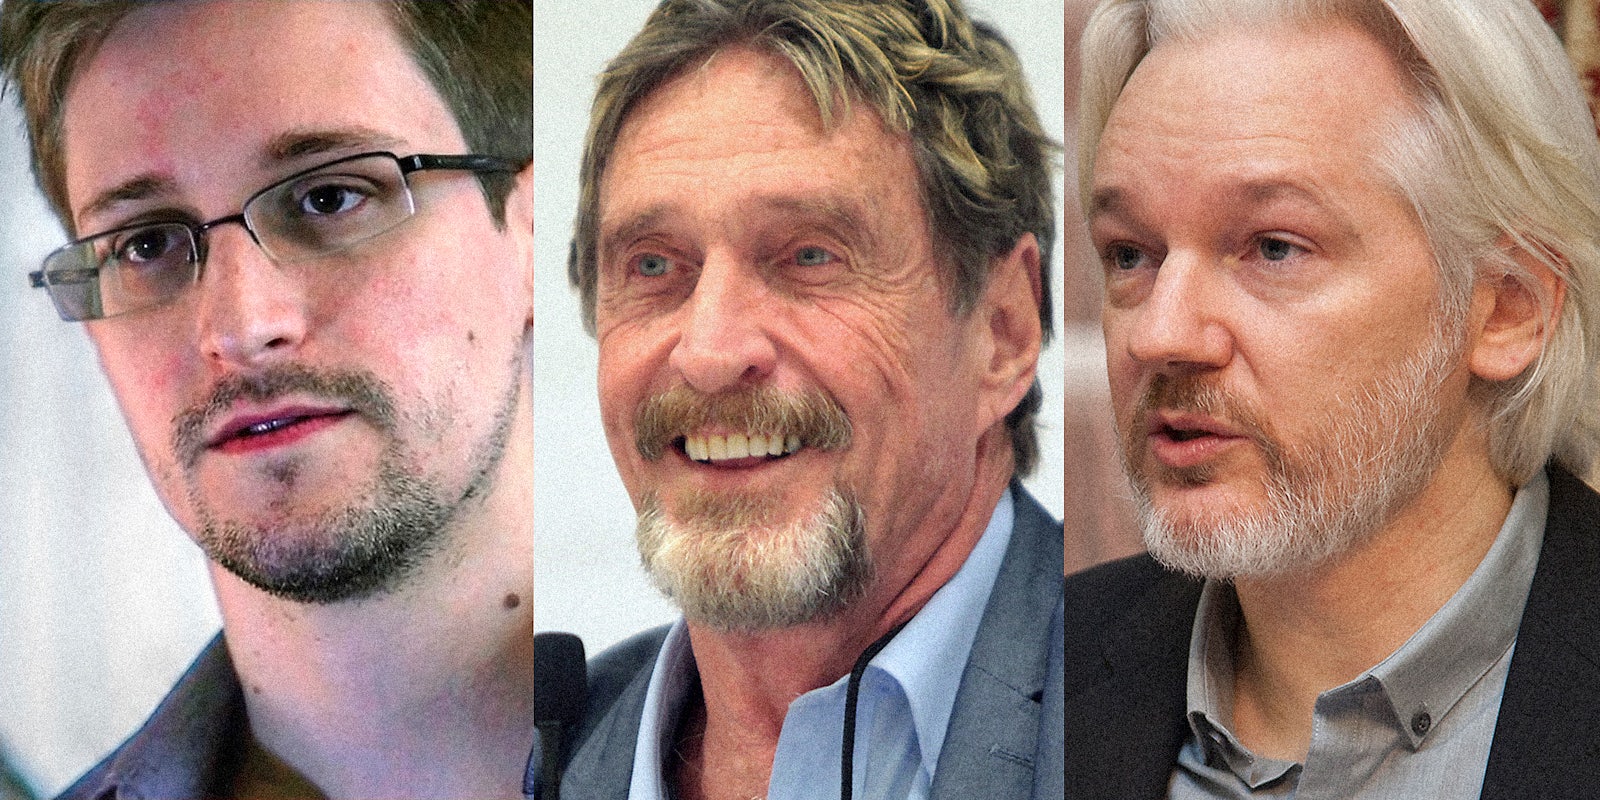 Edward Snowden (L), John McAfee (C), and Julian Assange (R).